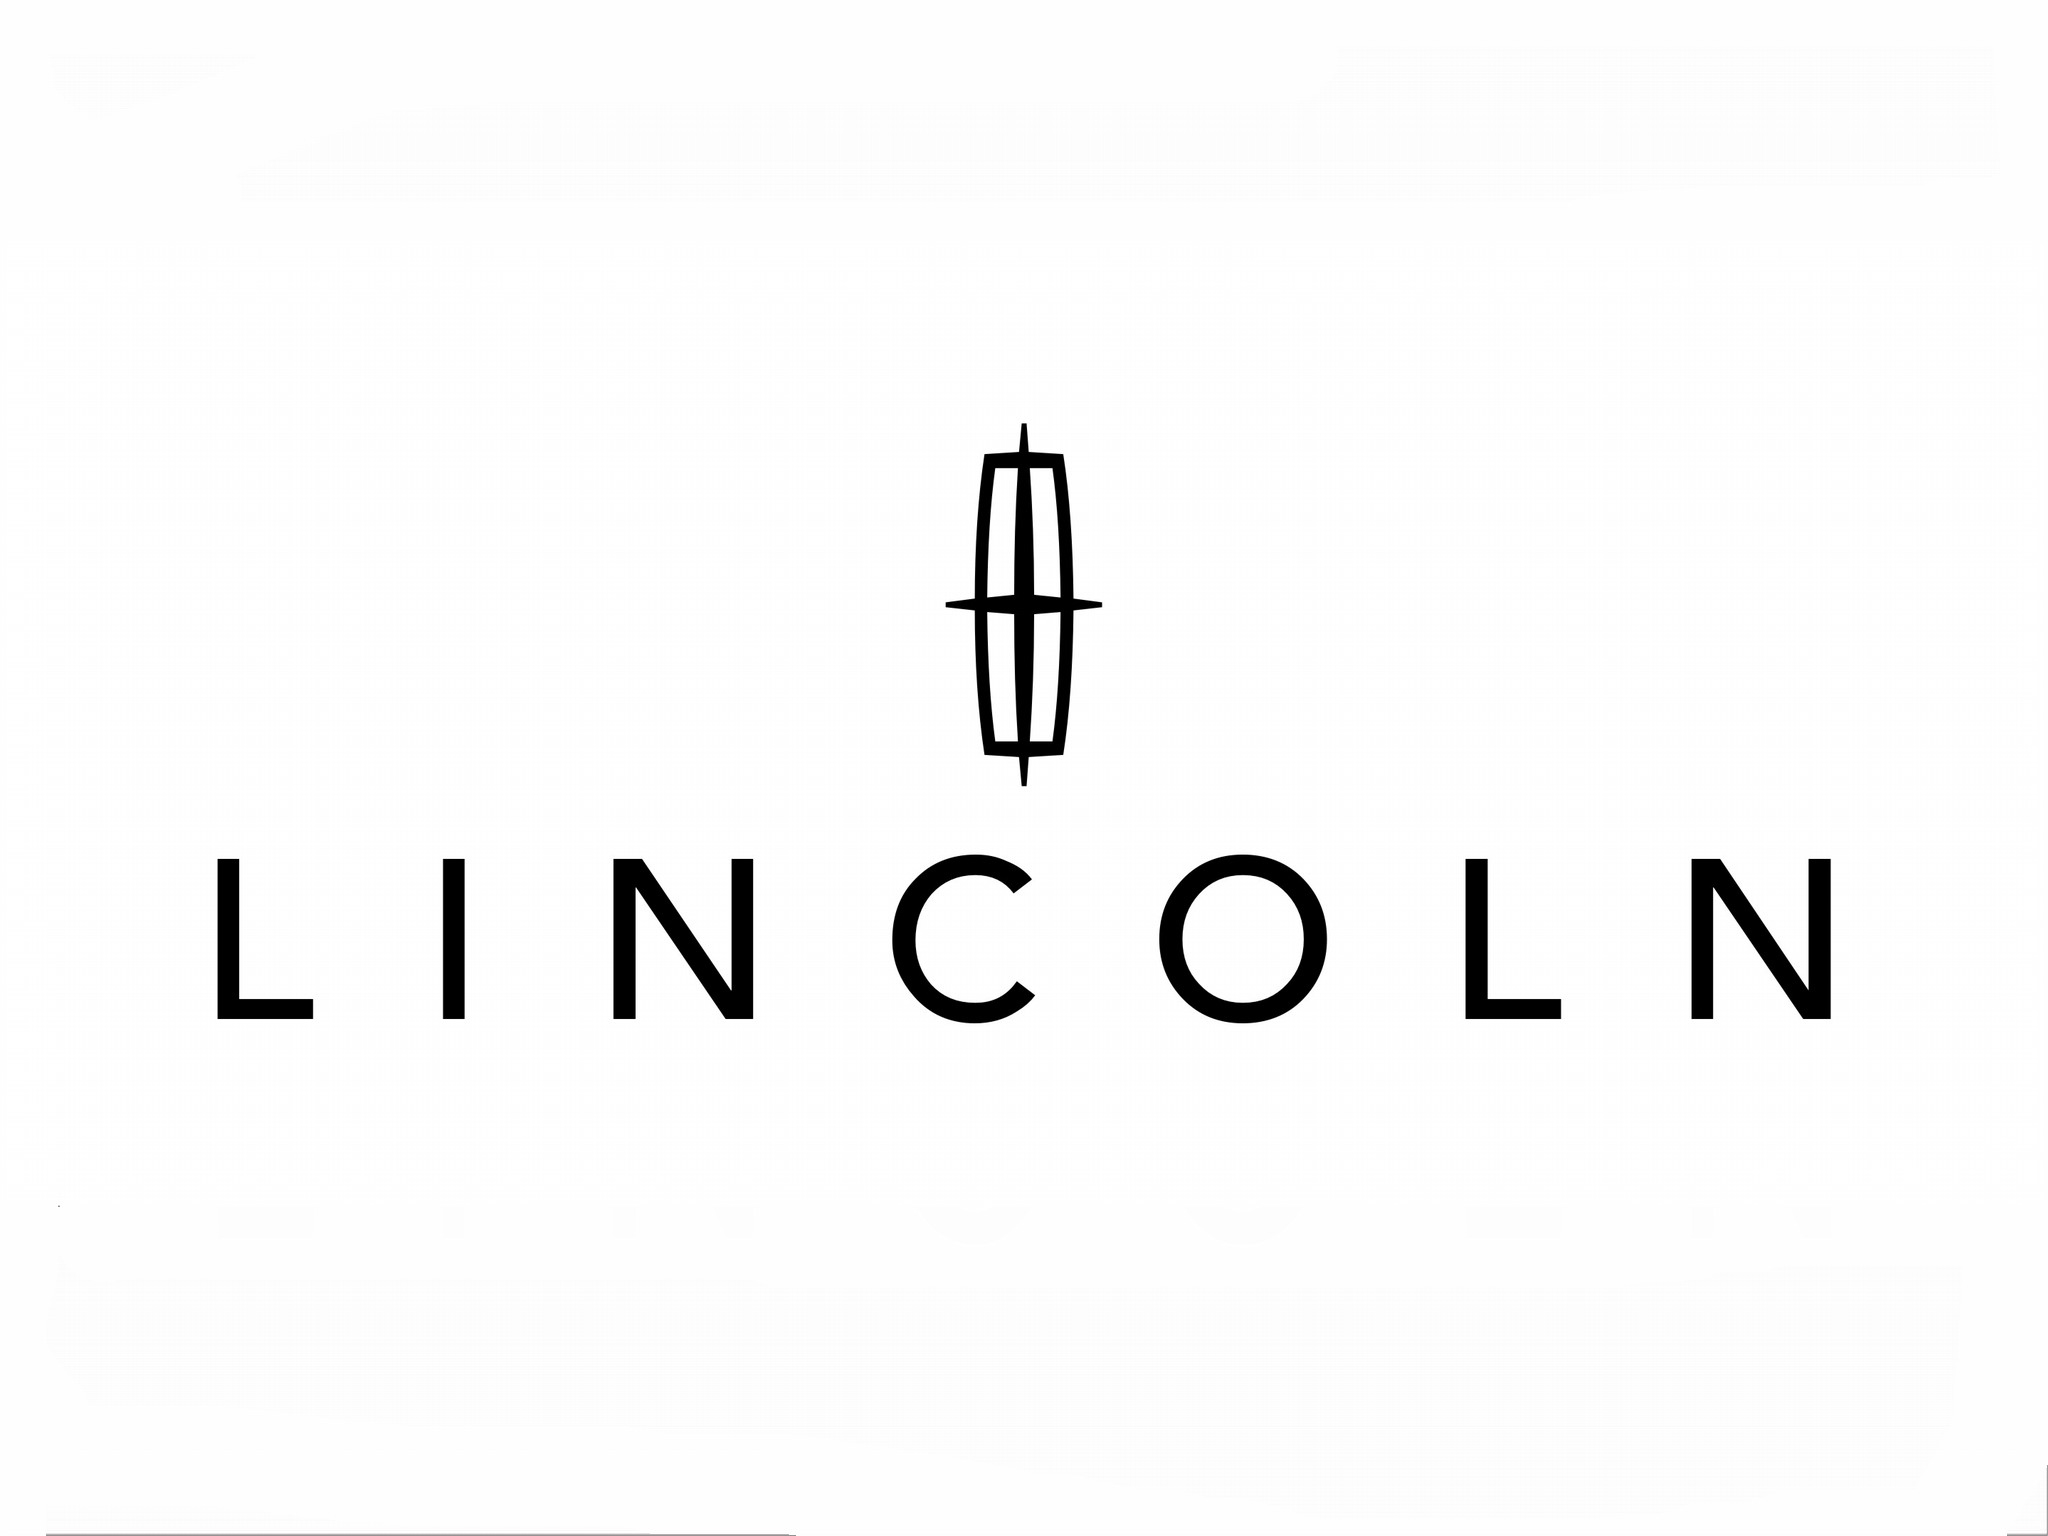 Lincoln Company Logo - Lincoln Motor Company Clipart